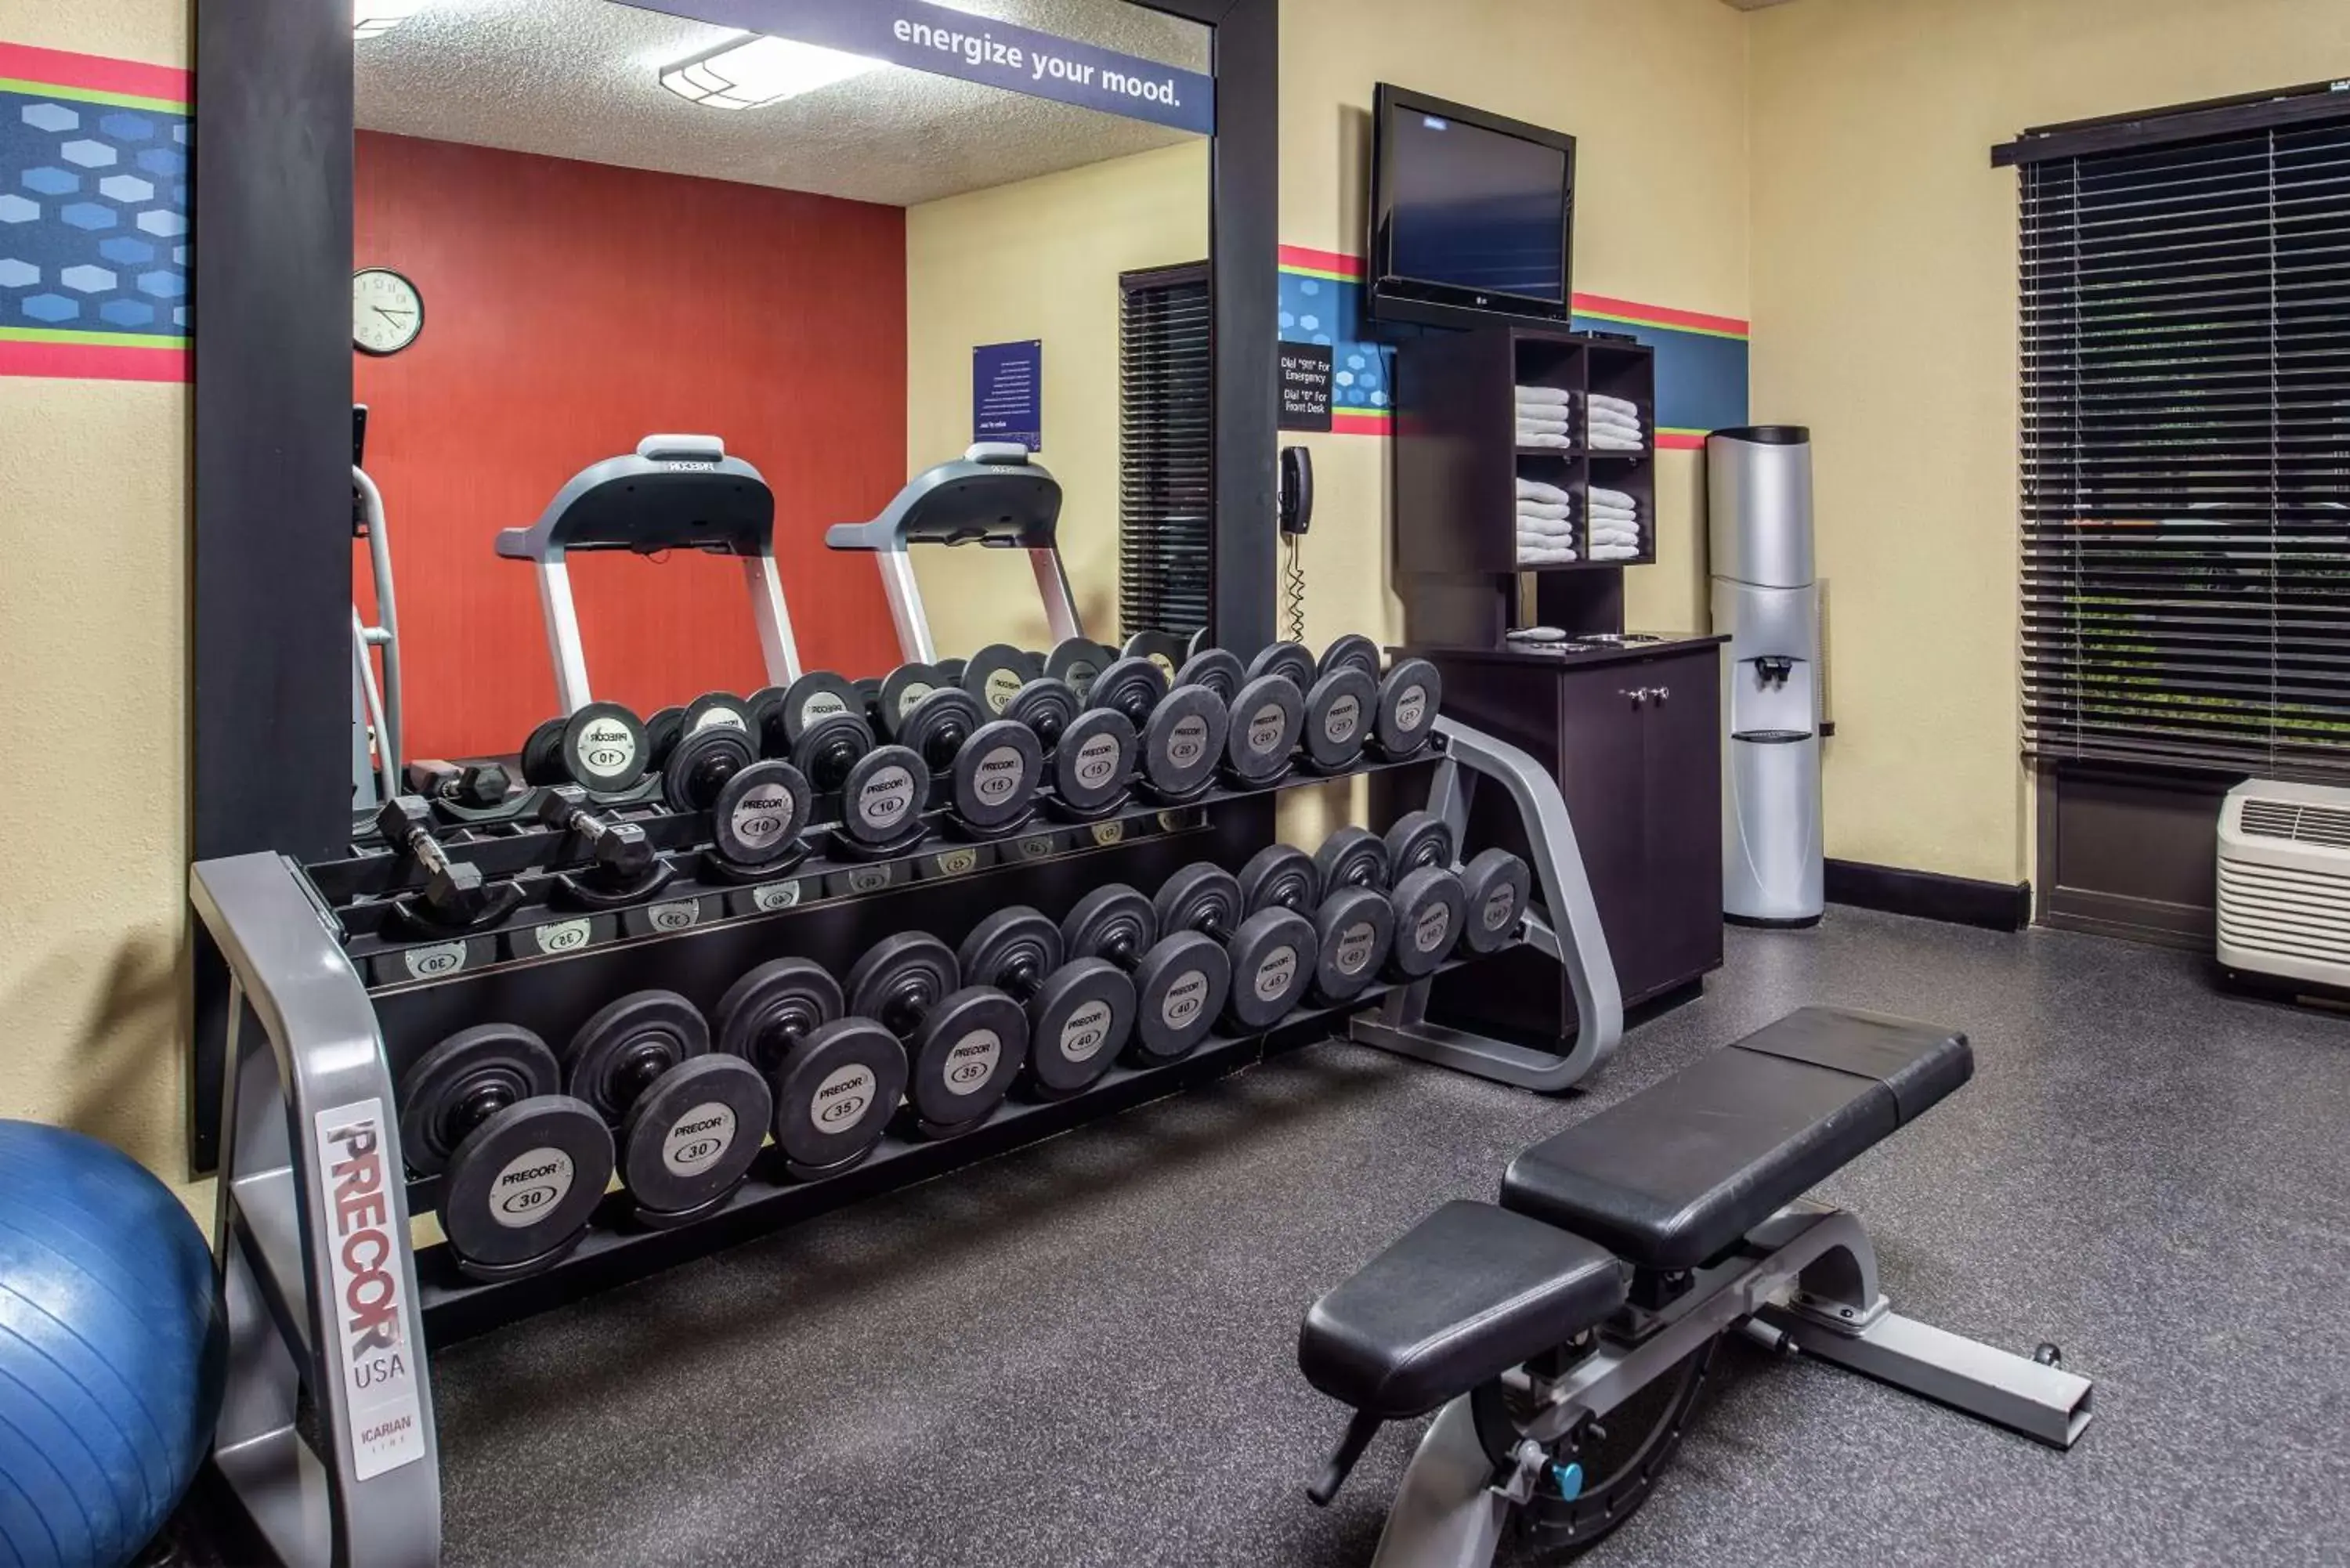 Fitness centre/facilities, Fitness Center/Facilities in Hampton Inn Albuquerque - University/Midtown